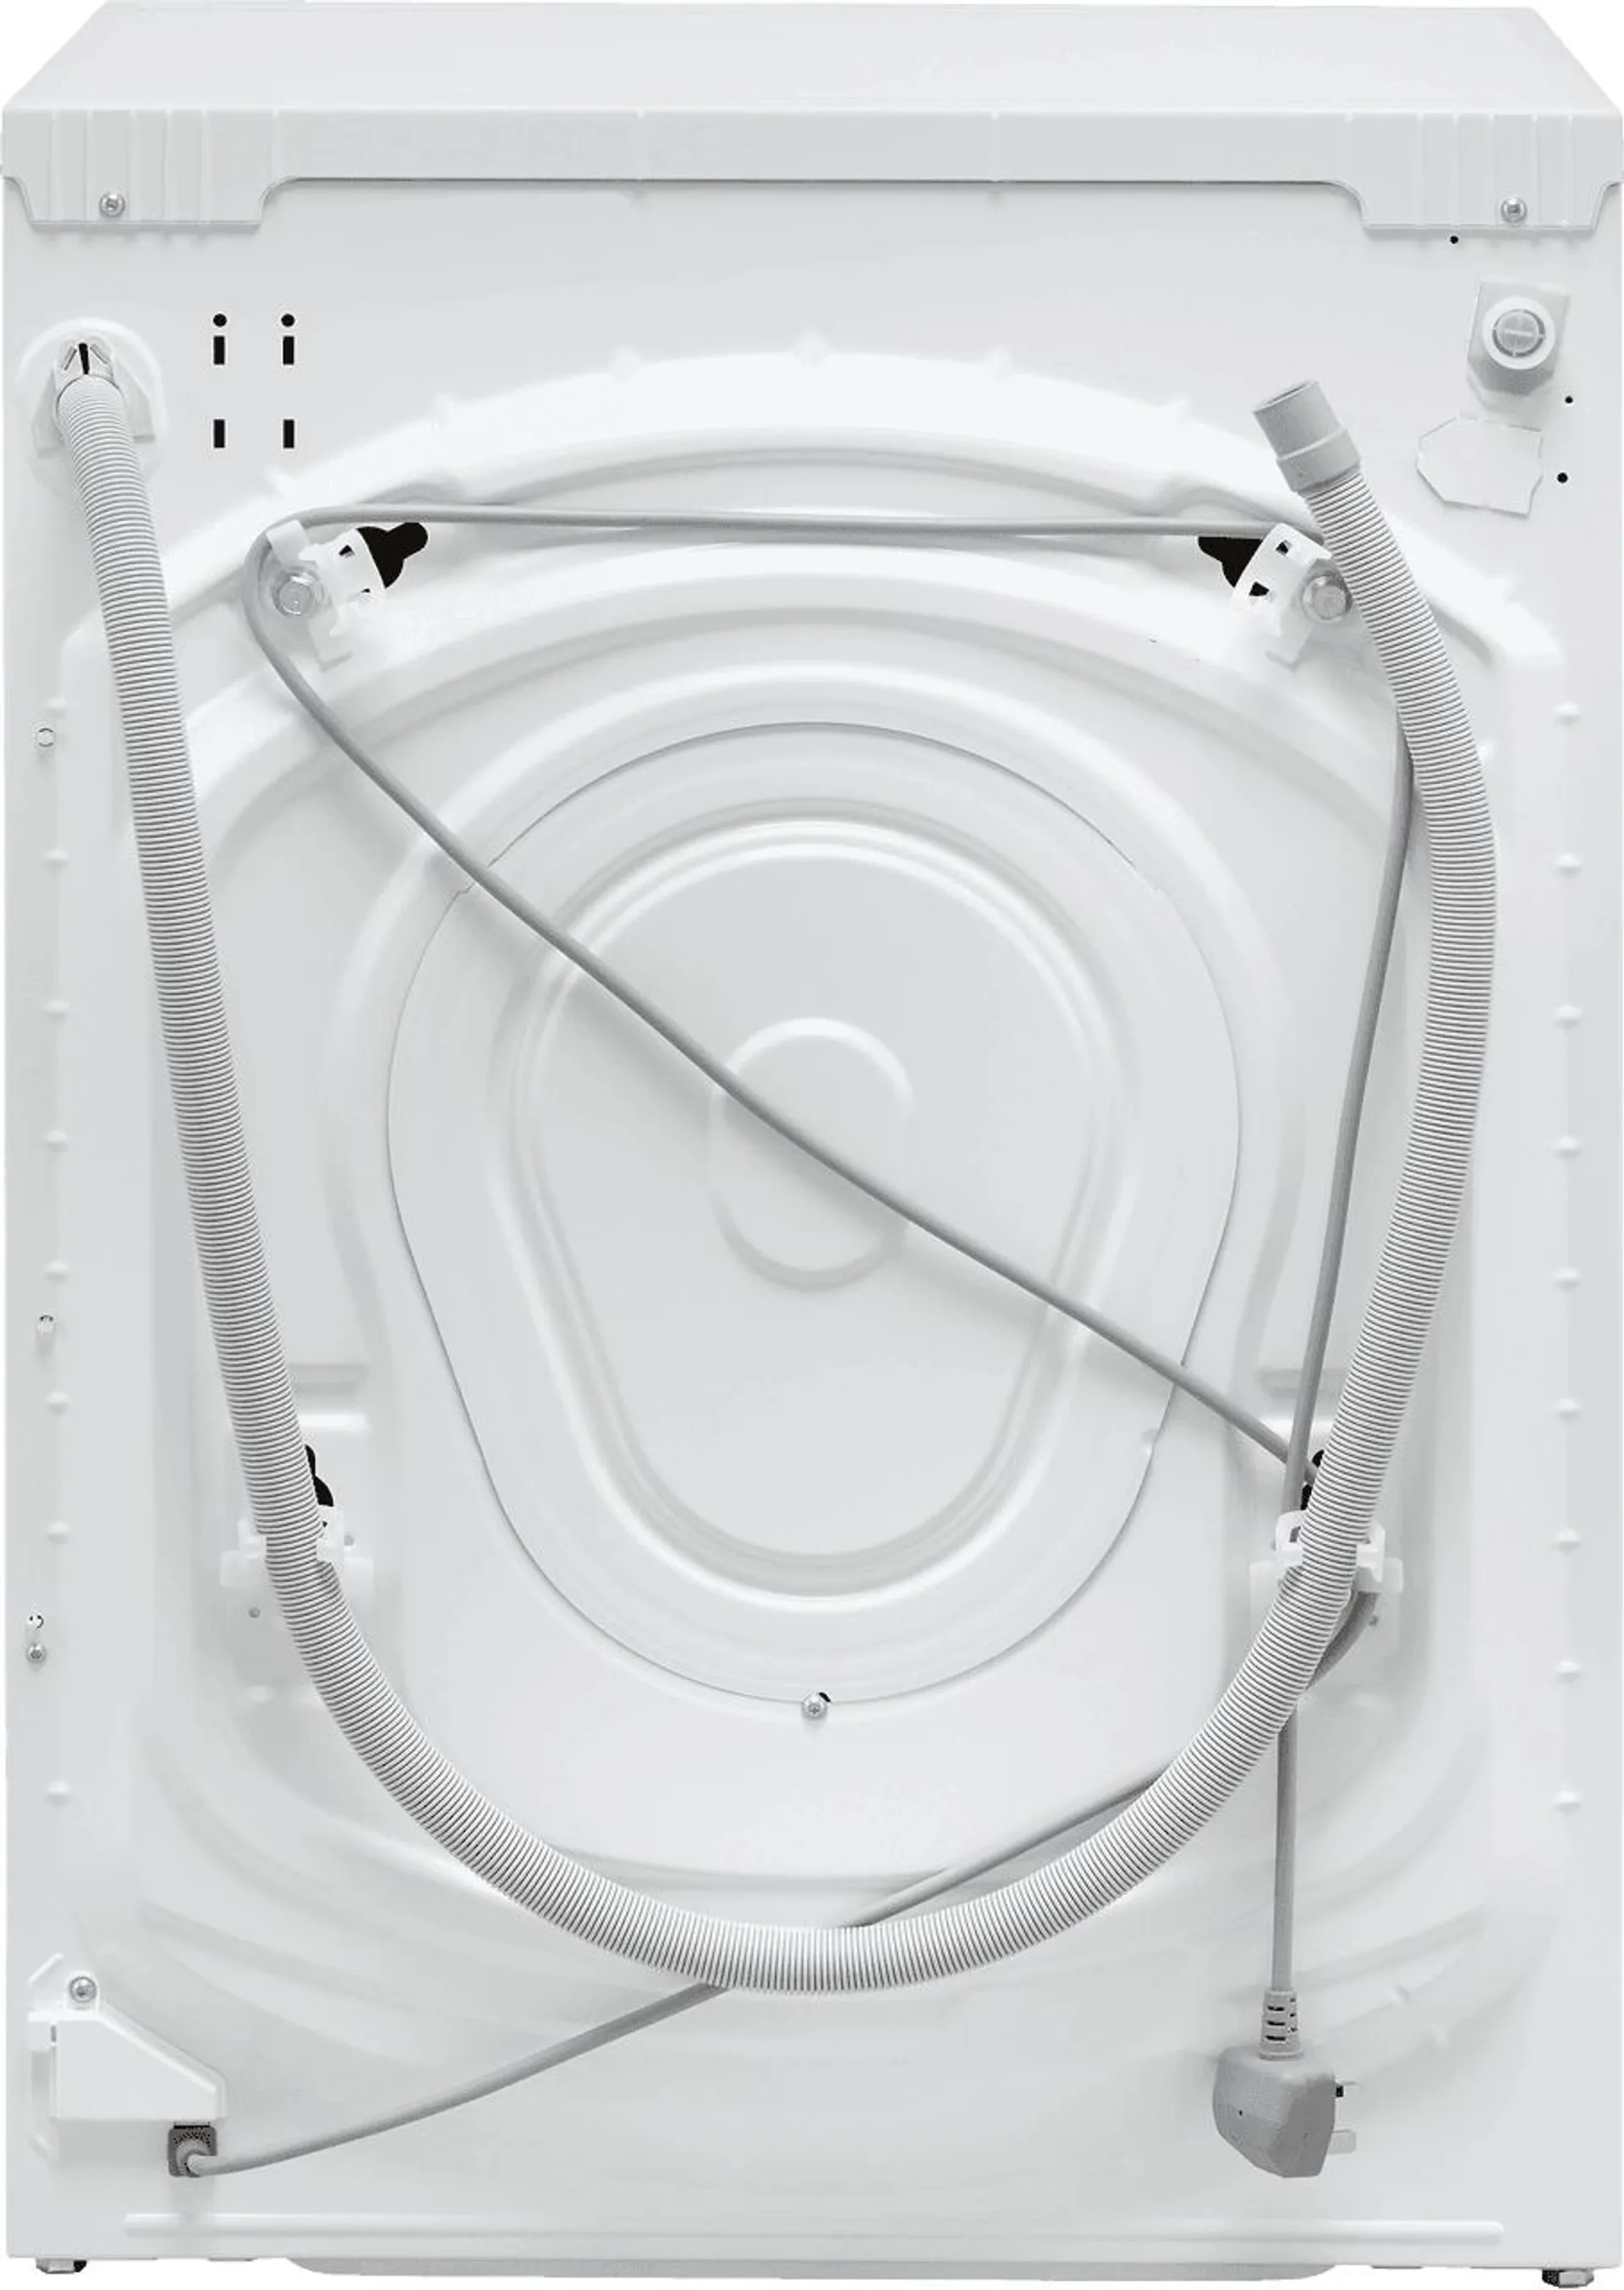 Bosch Series 2 WAJ28008GB 7Kg Washing Machine with 1400 rpm - White - D Rated